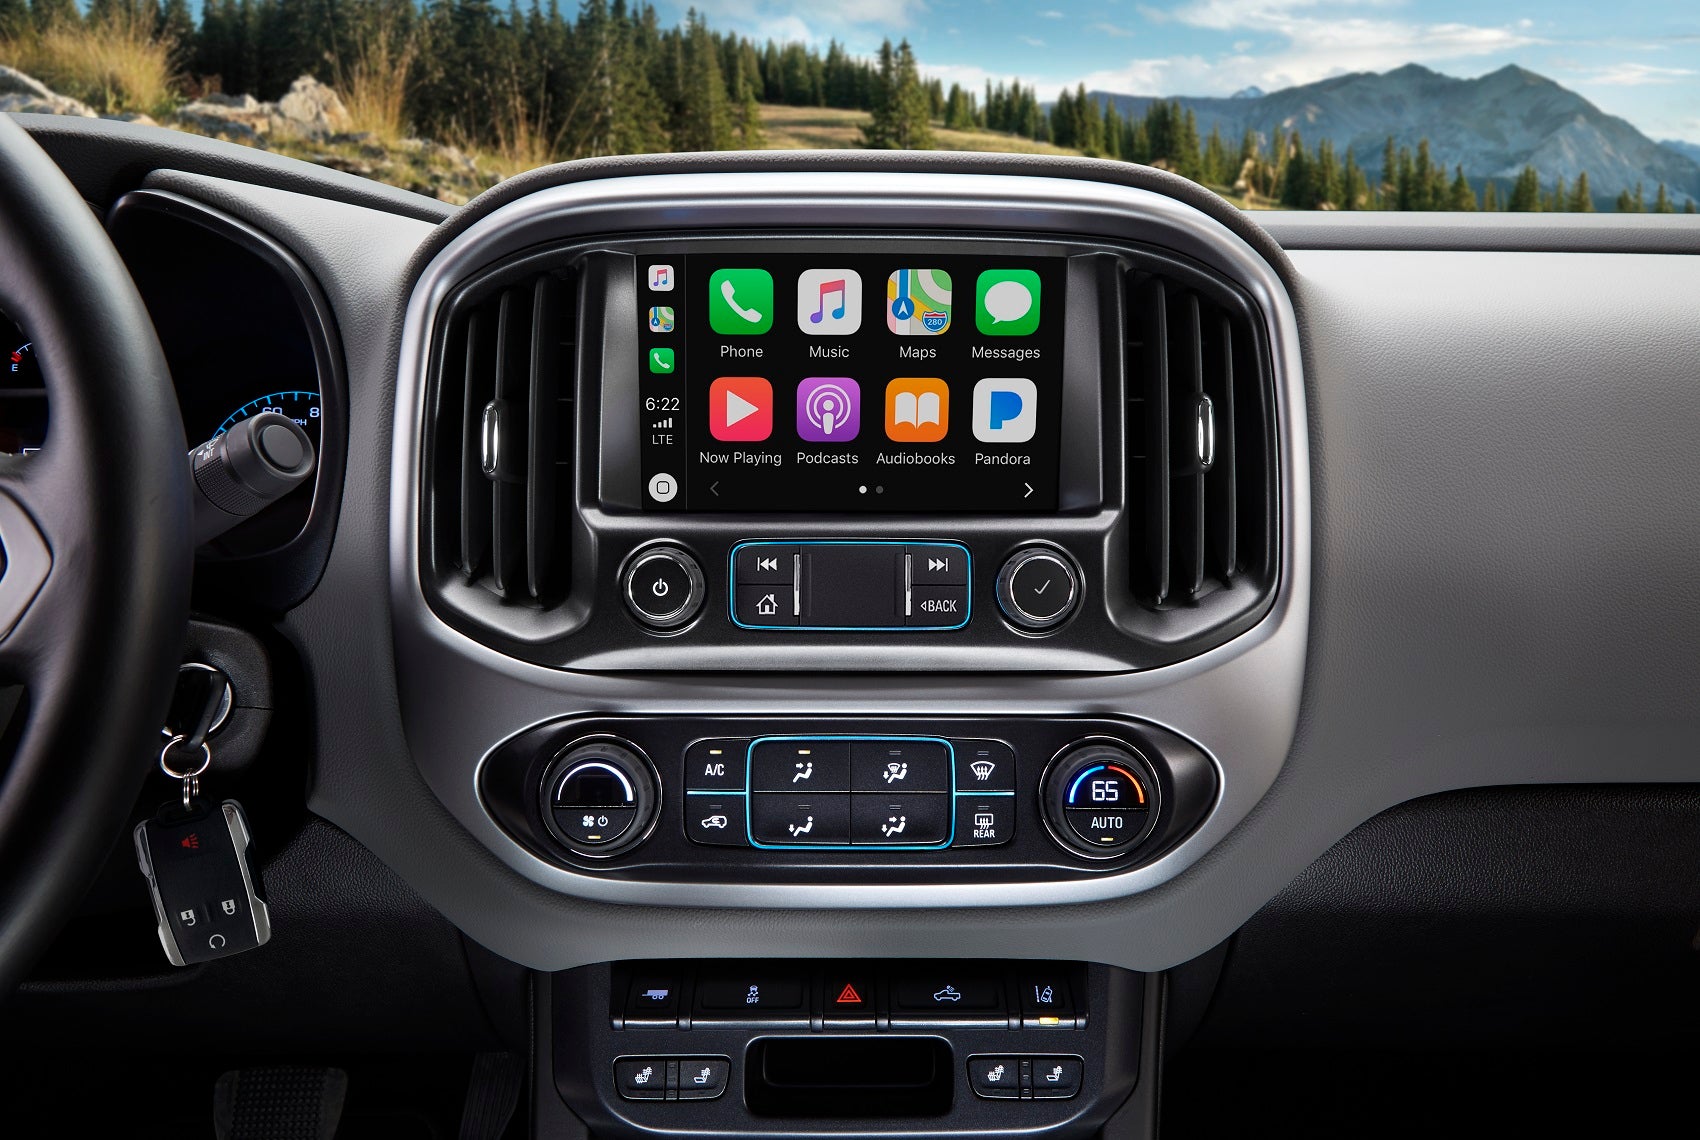 2021 Chevy Colorado Interior with Apple CarPlay™ Technology